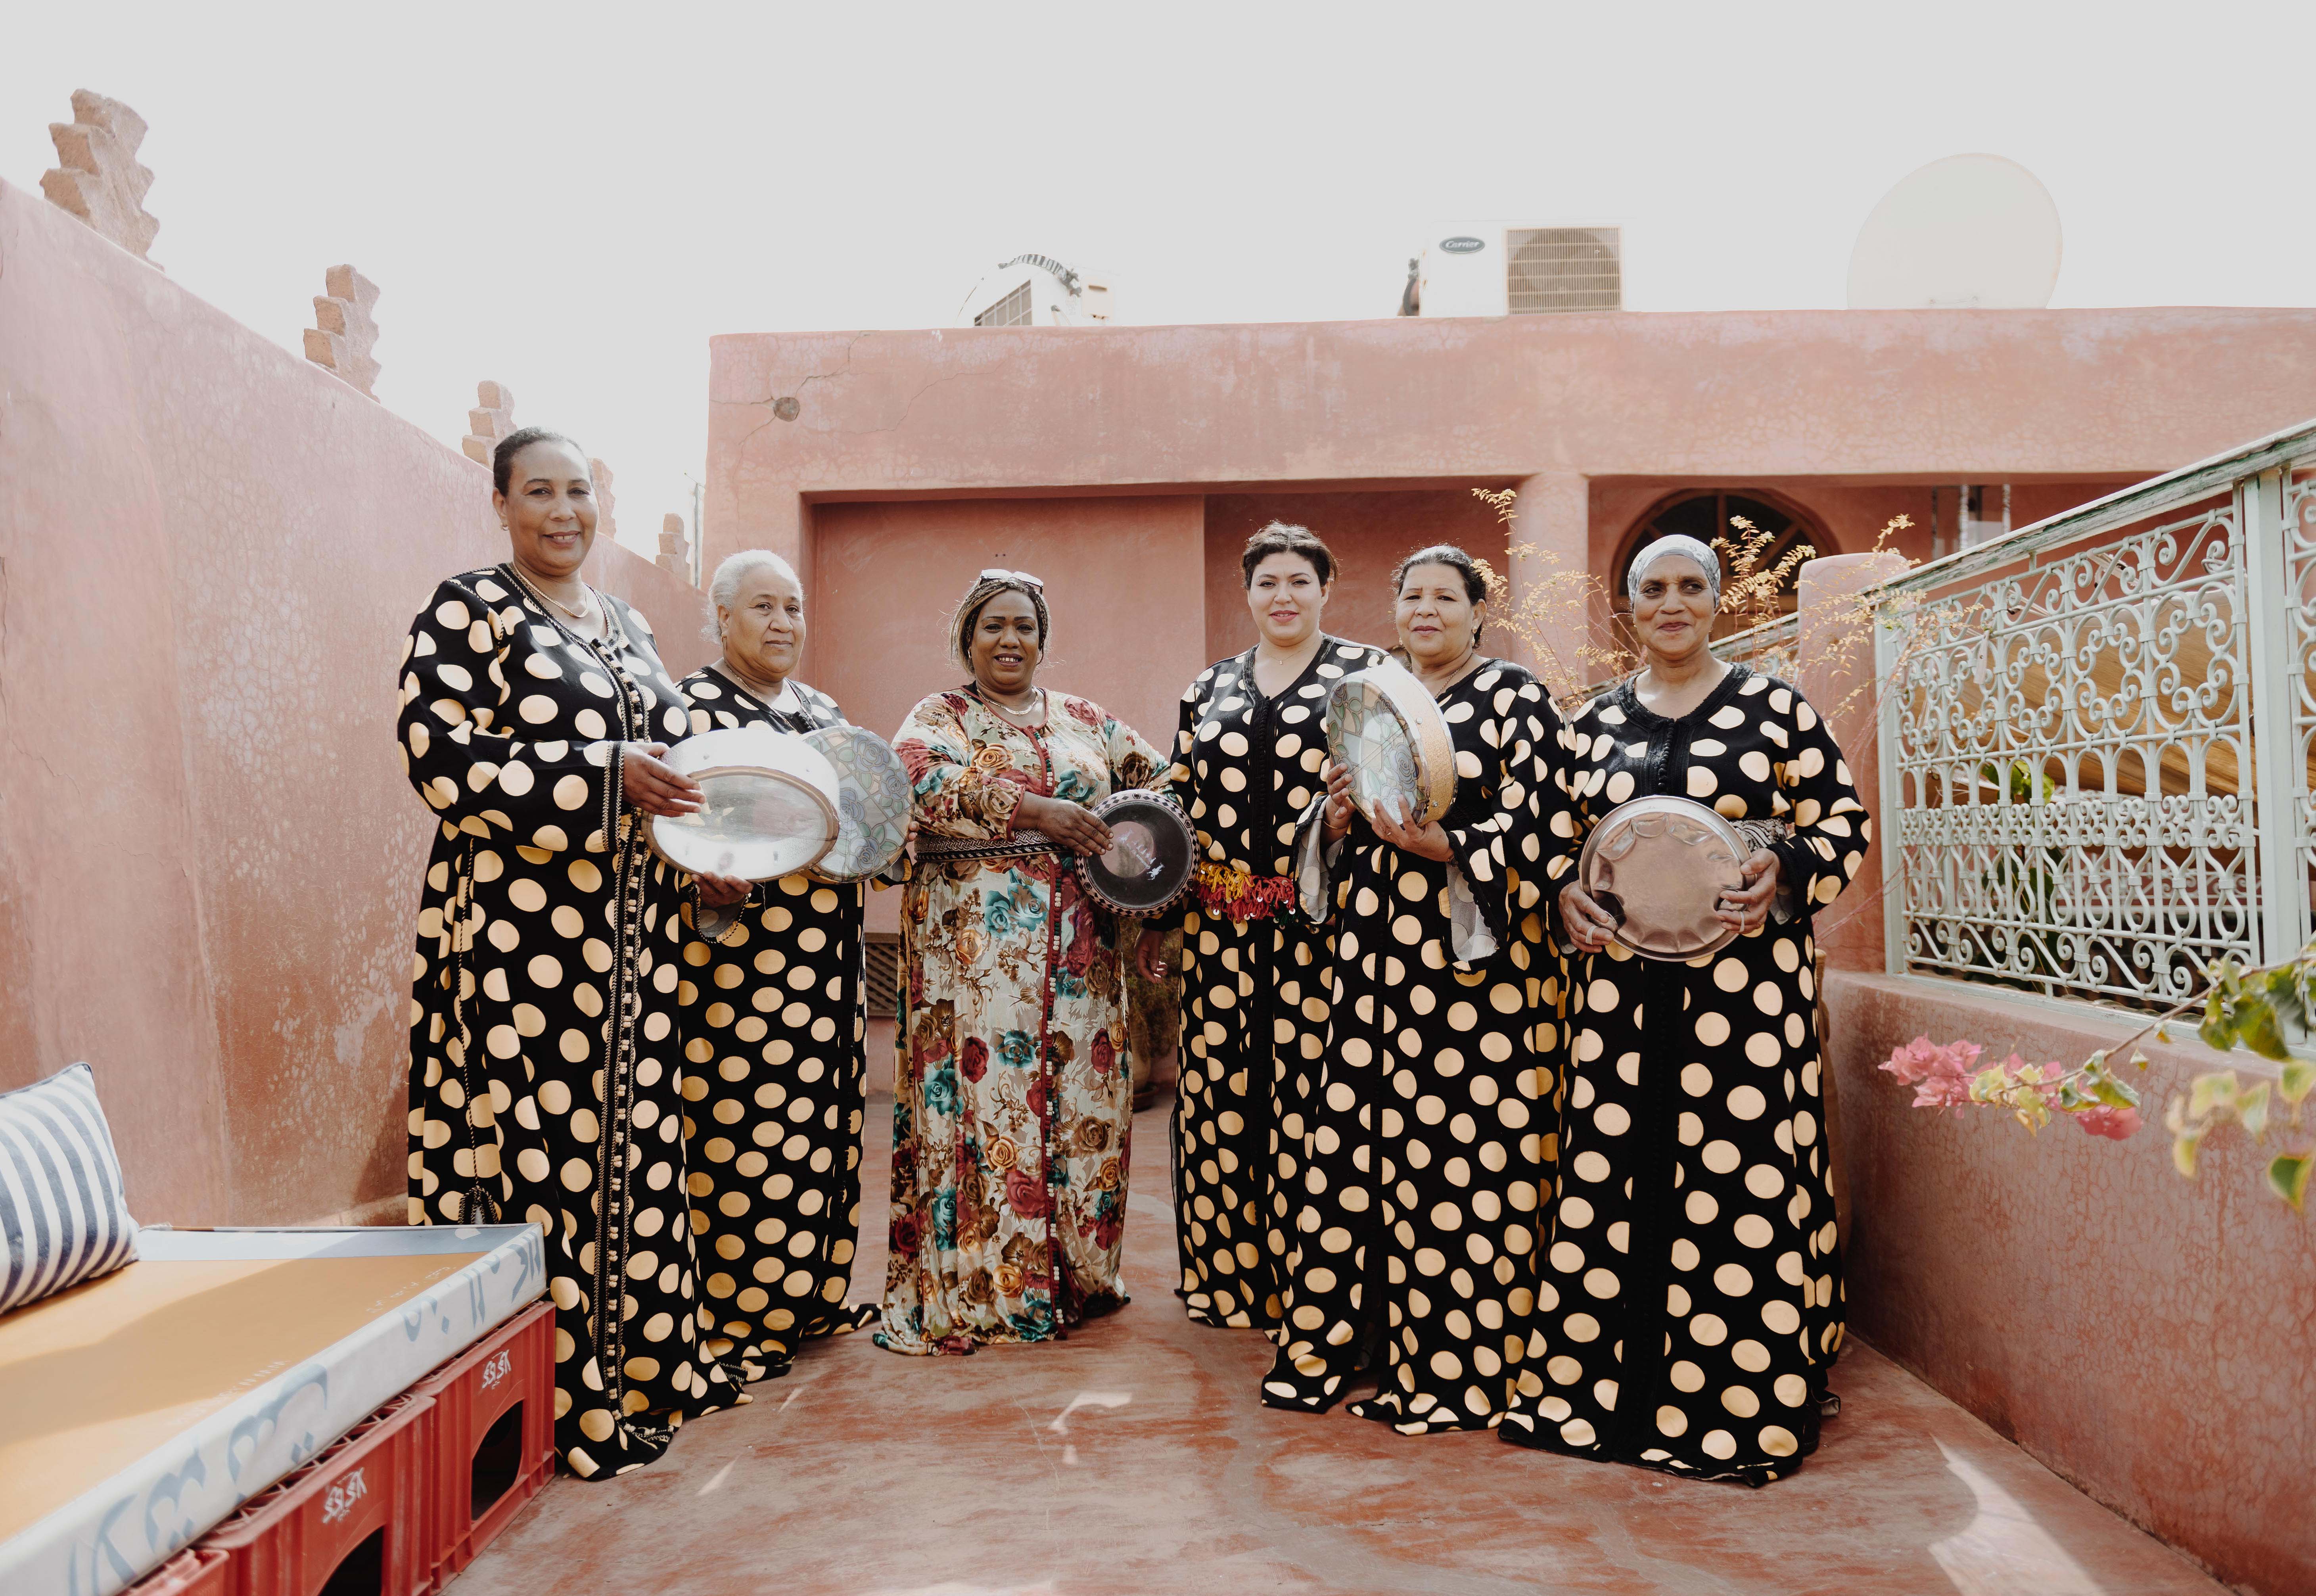 Habibi Festival 2022 feat. Bedouin Burger, Bnat el Houariyat & Esraa Warda, Firas Zreik, HAT, Nour Harkati, Noura Mint Seymali, Yacine Boulares’s Night in Tunisia & Zahra Alzubaidi